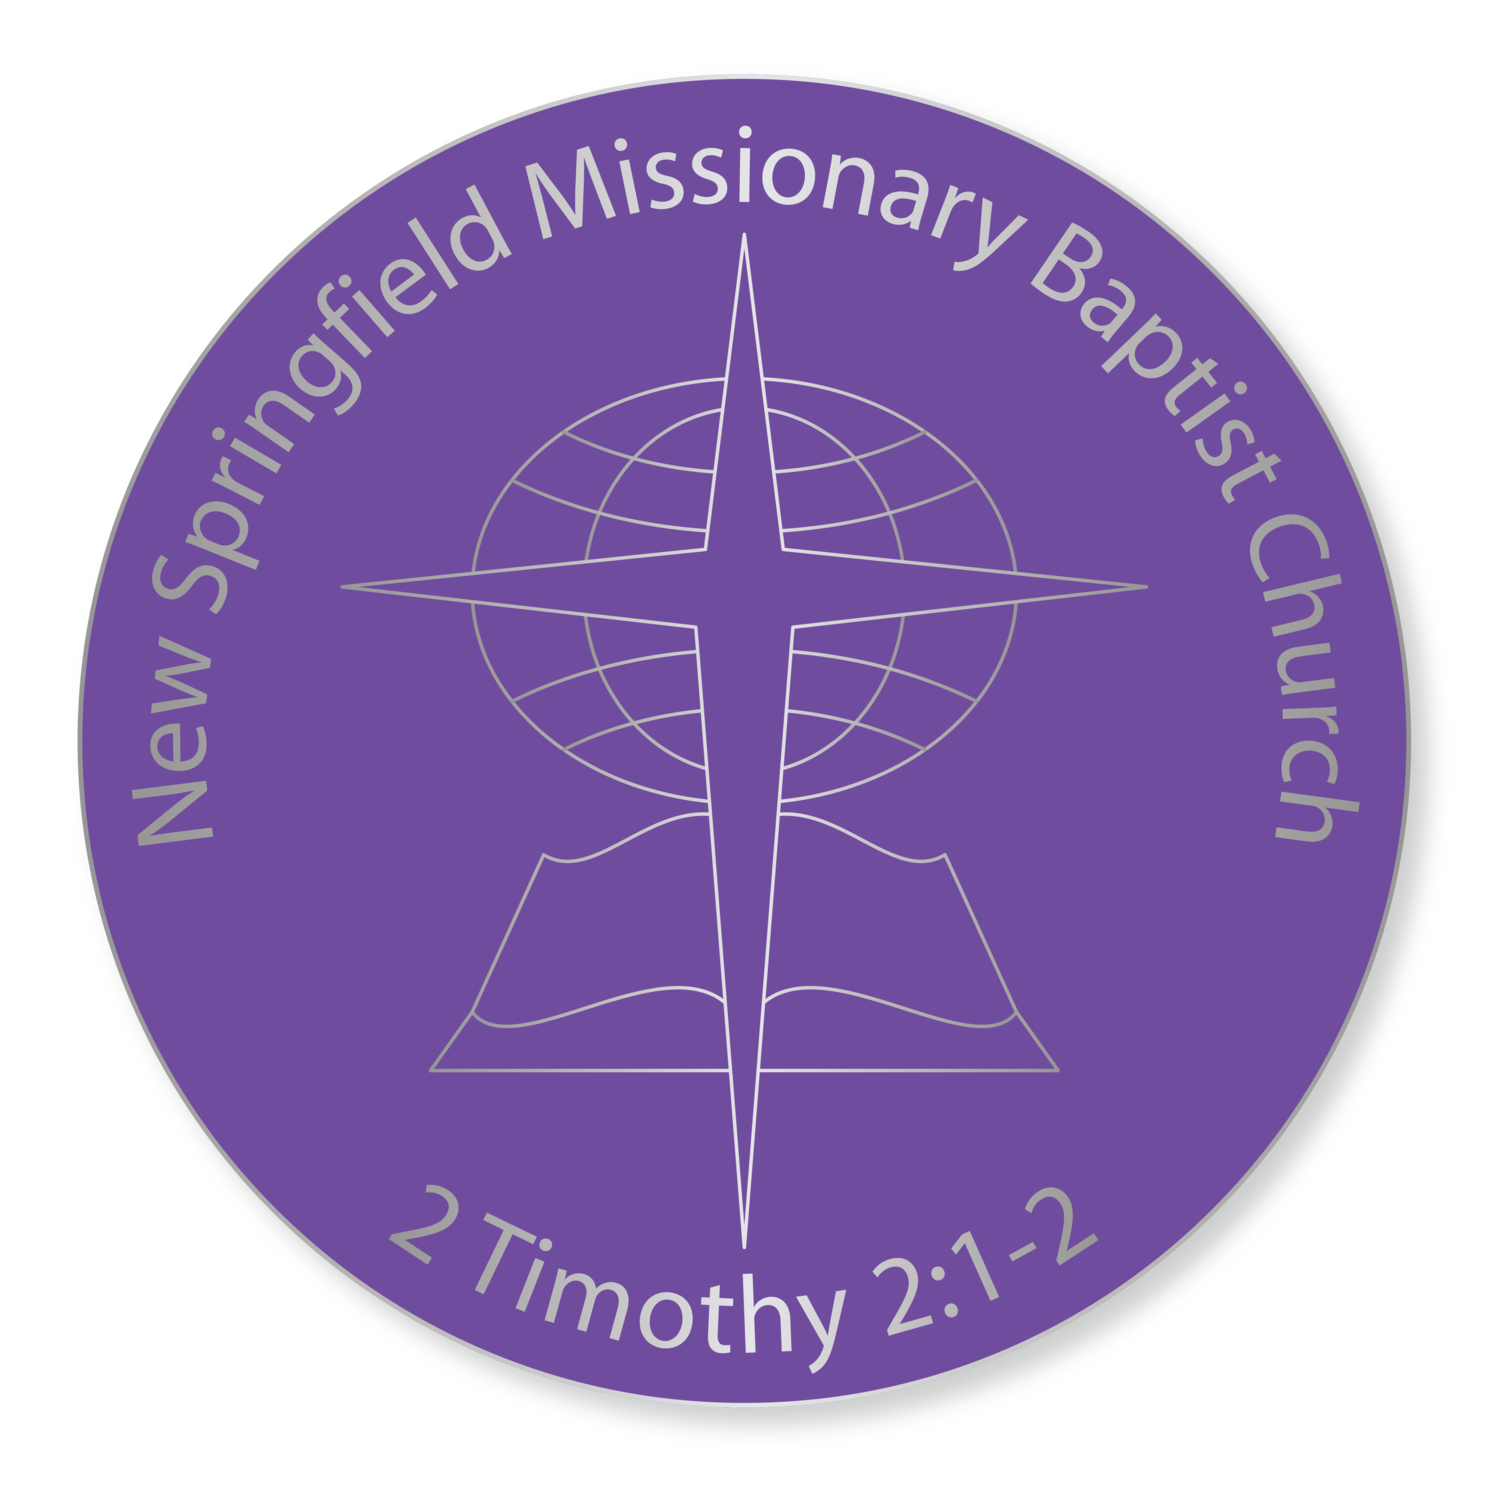 New Springfield Missionary Baptist Church